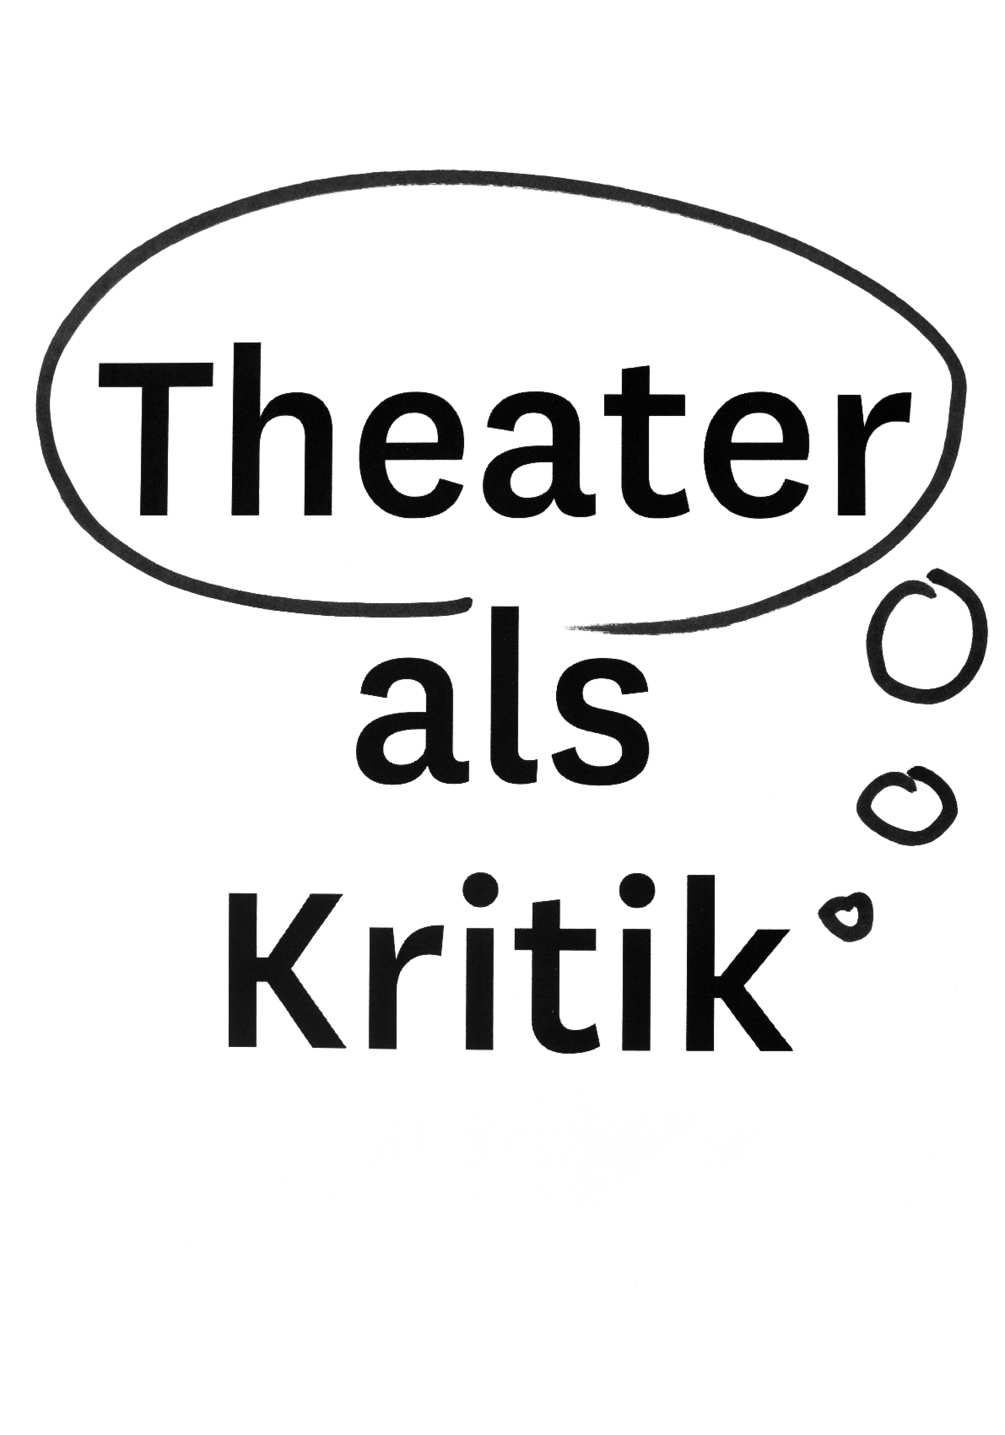 theater-as-critique-slip-17-1005x1435px